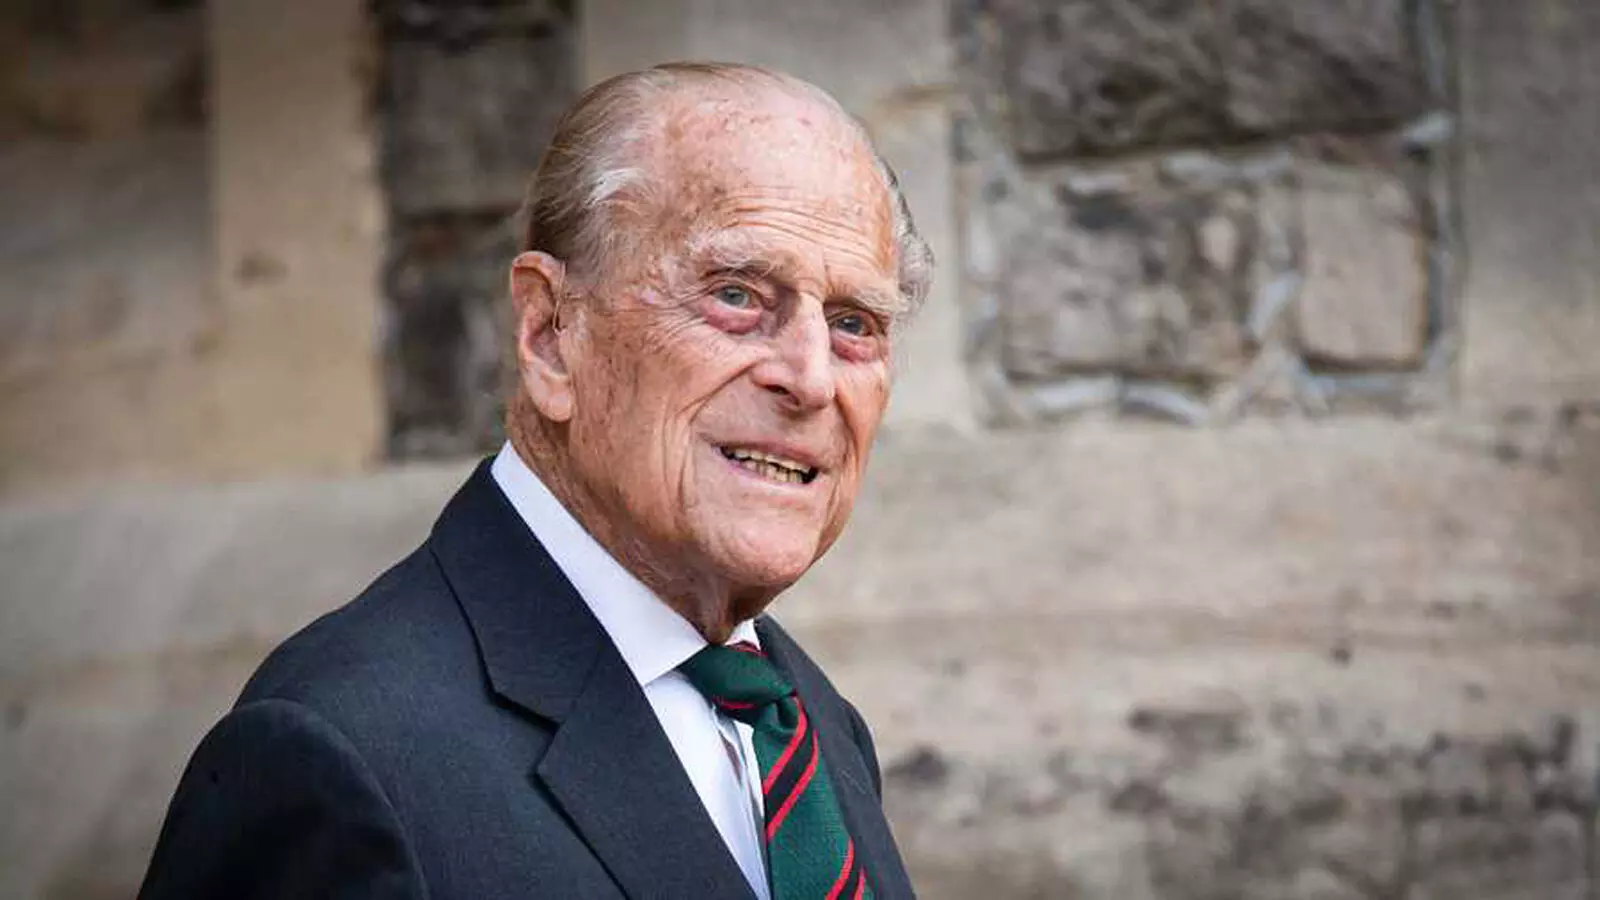 Prince Philip, husband of Queen Elizabeth II, passes away at 99